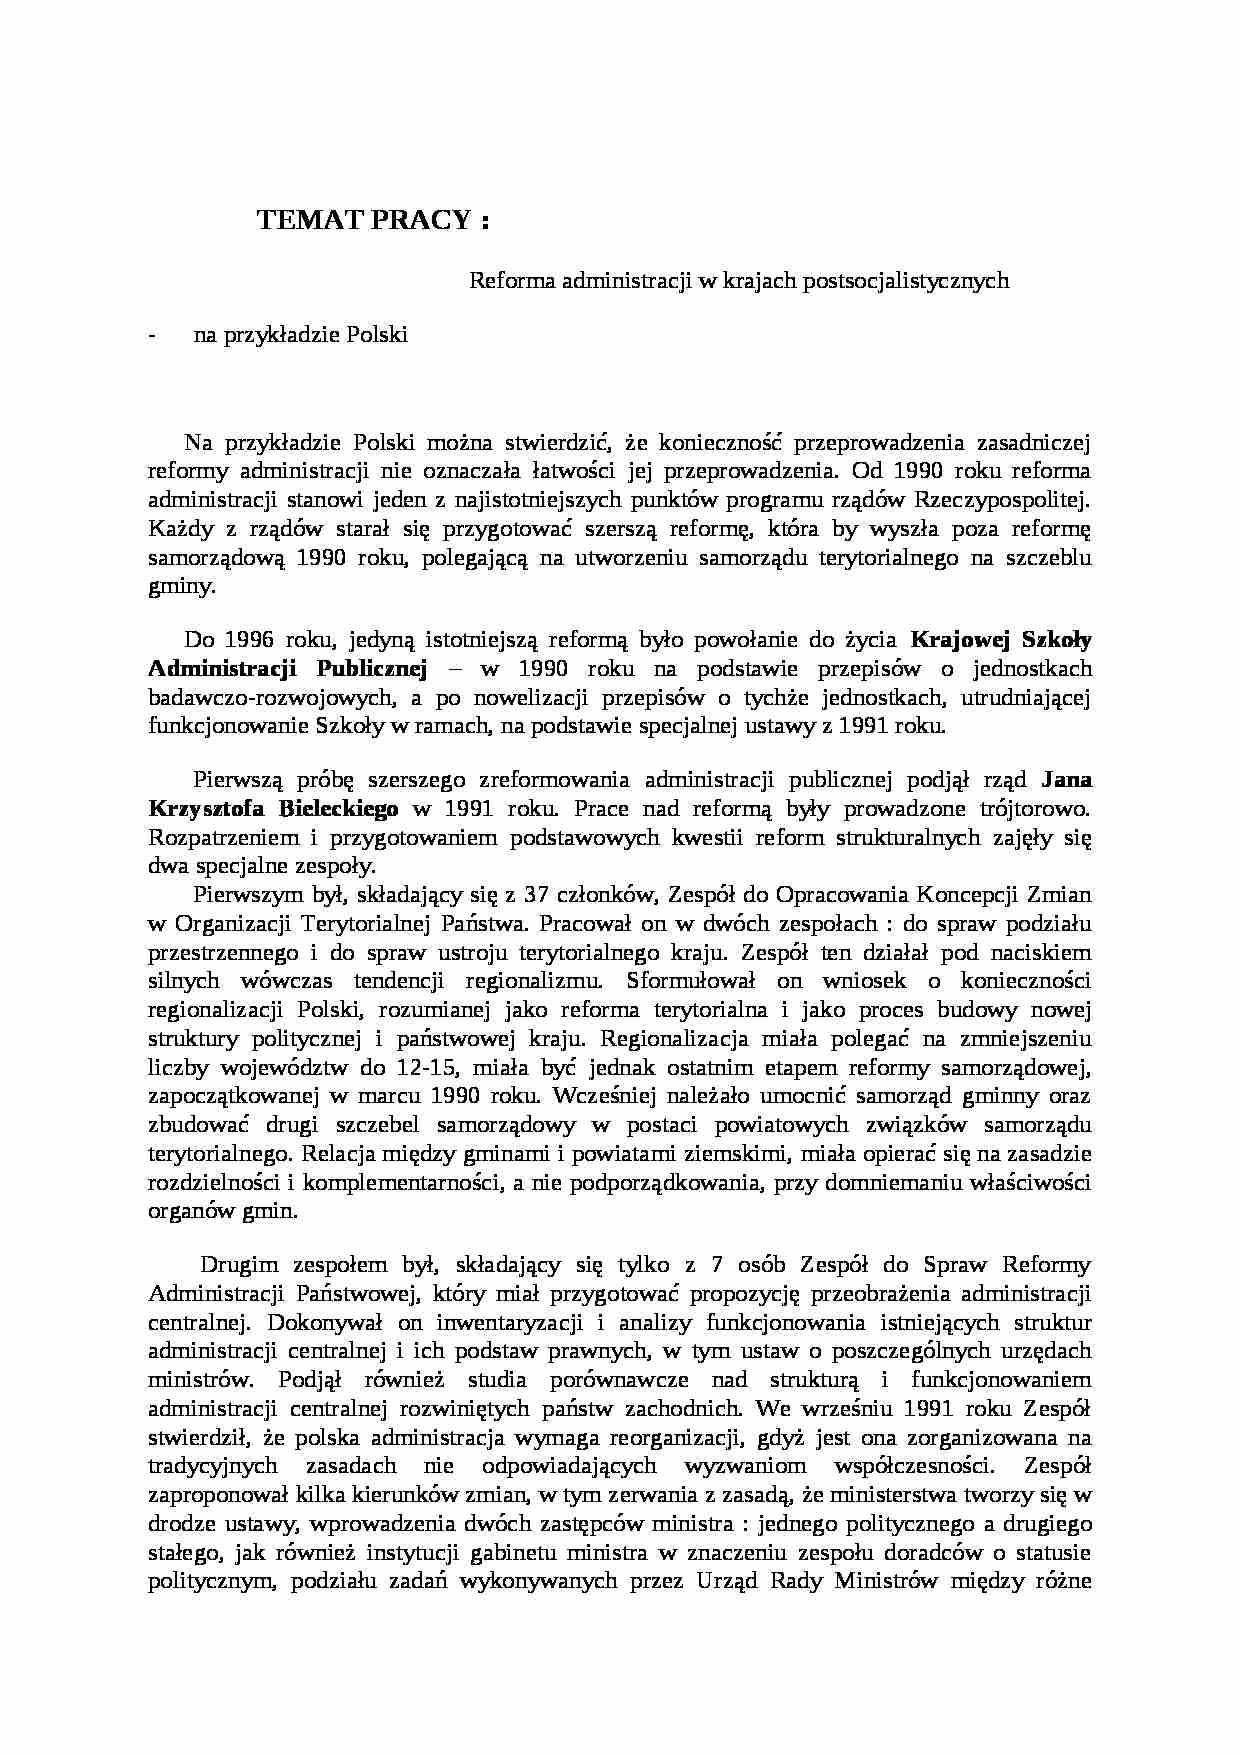 Reforma administracji - referat - strona 1